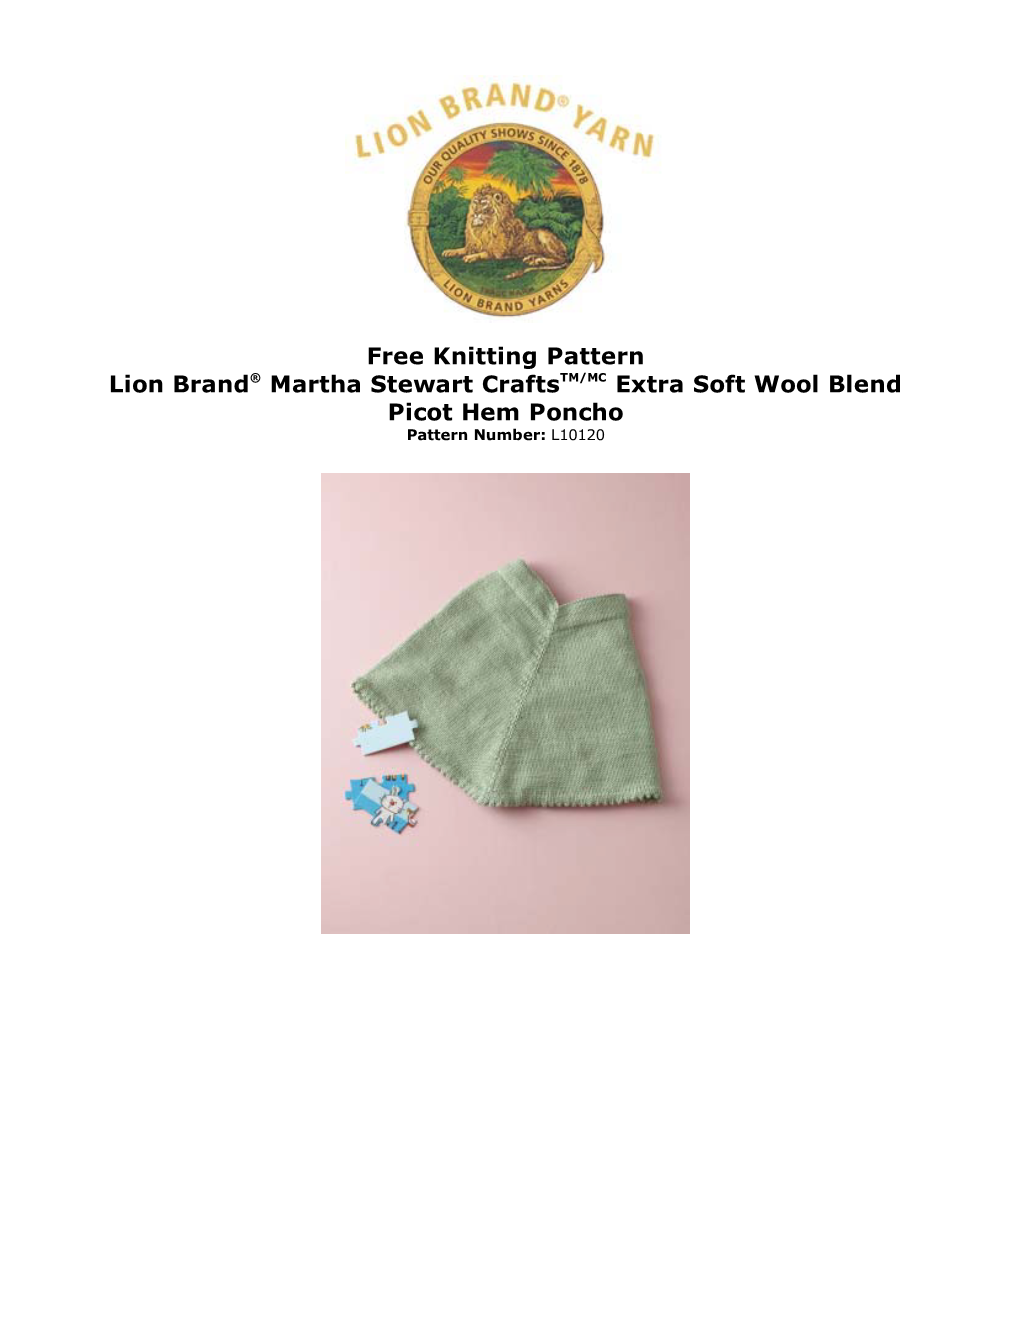 Free Knitting Pattern Lion Brand® Martha Stewart Craftstm/MC Extra